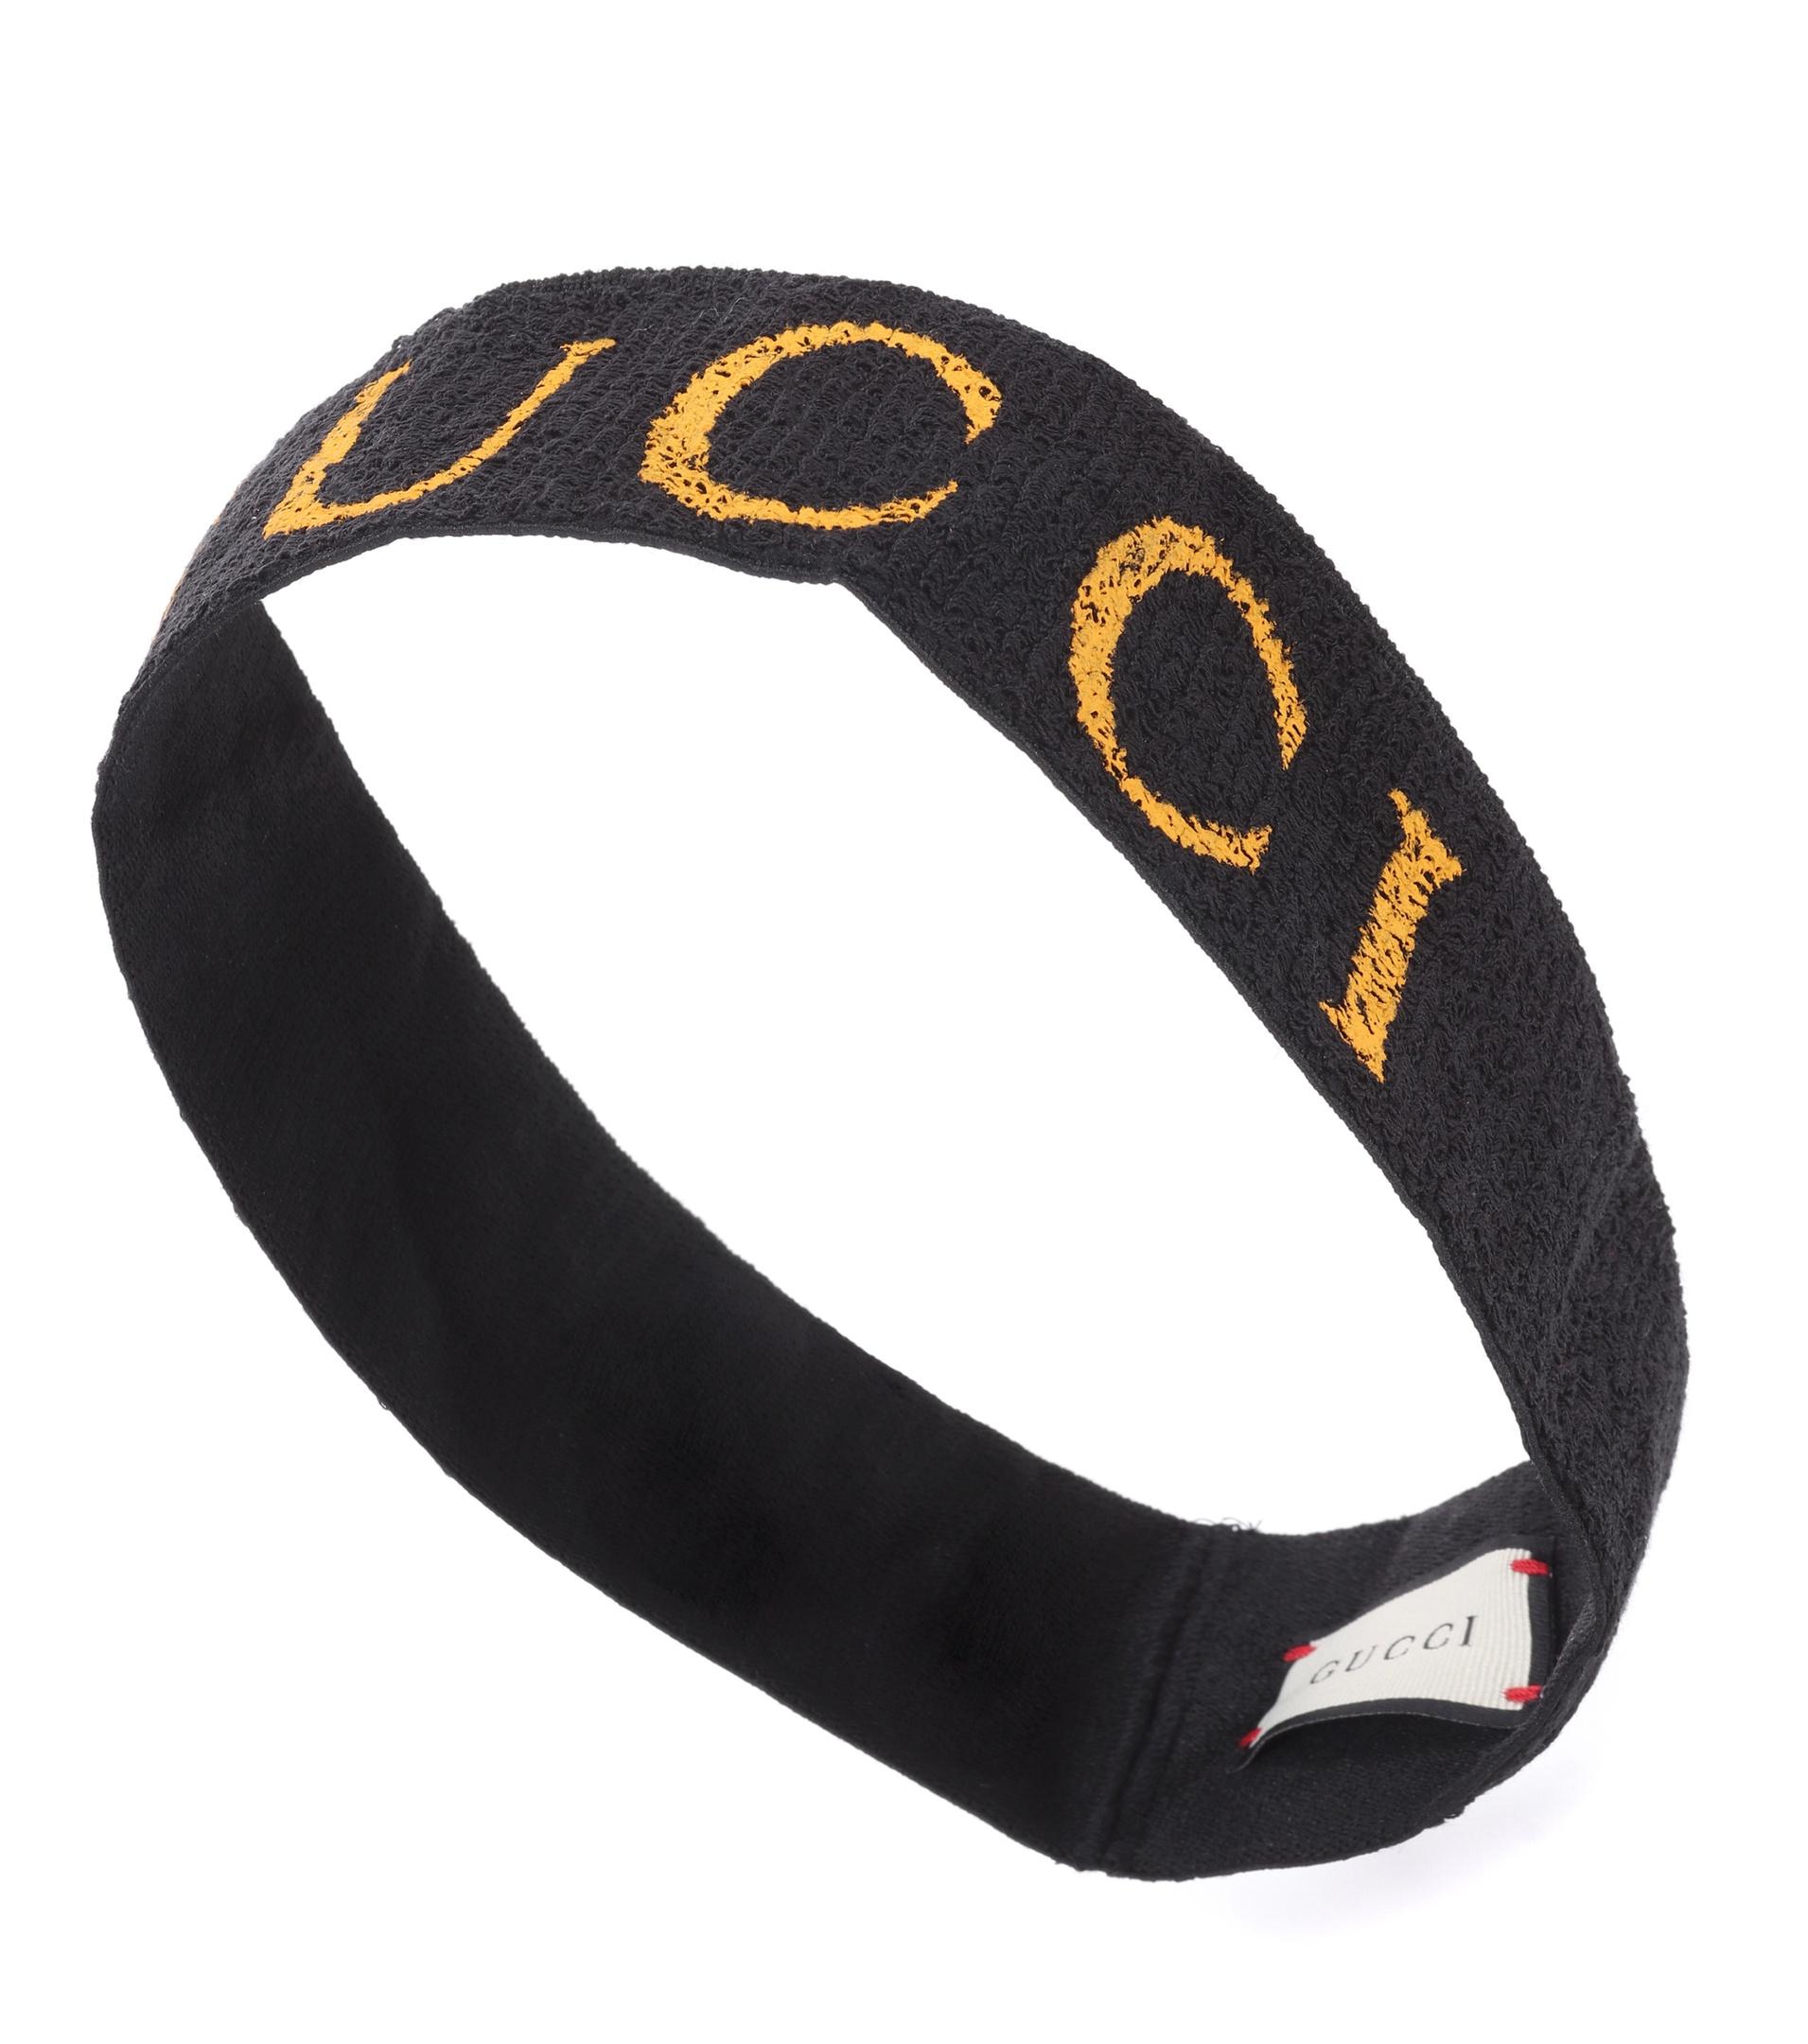 Lyst - Gucci Printed Headband in Black